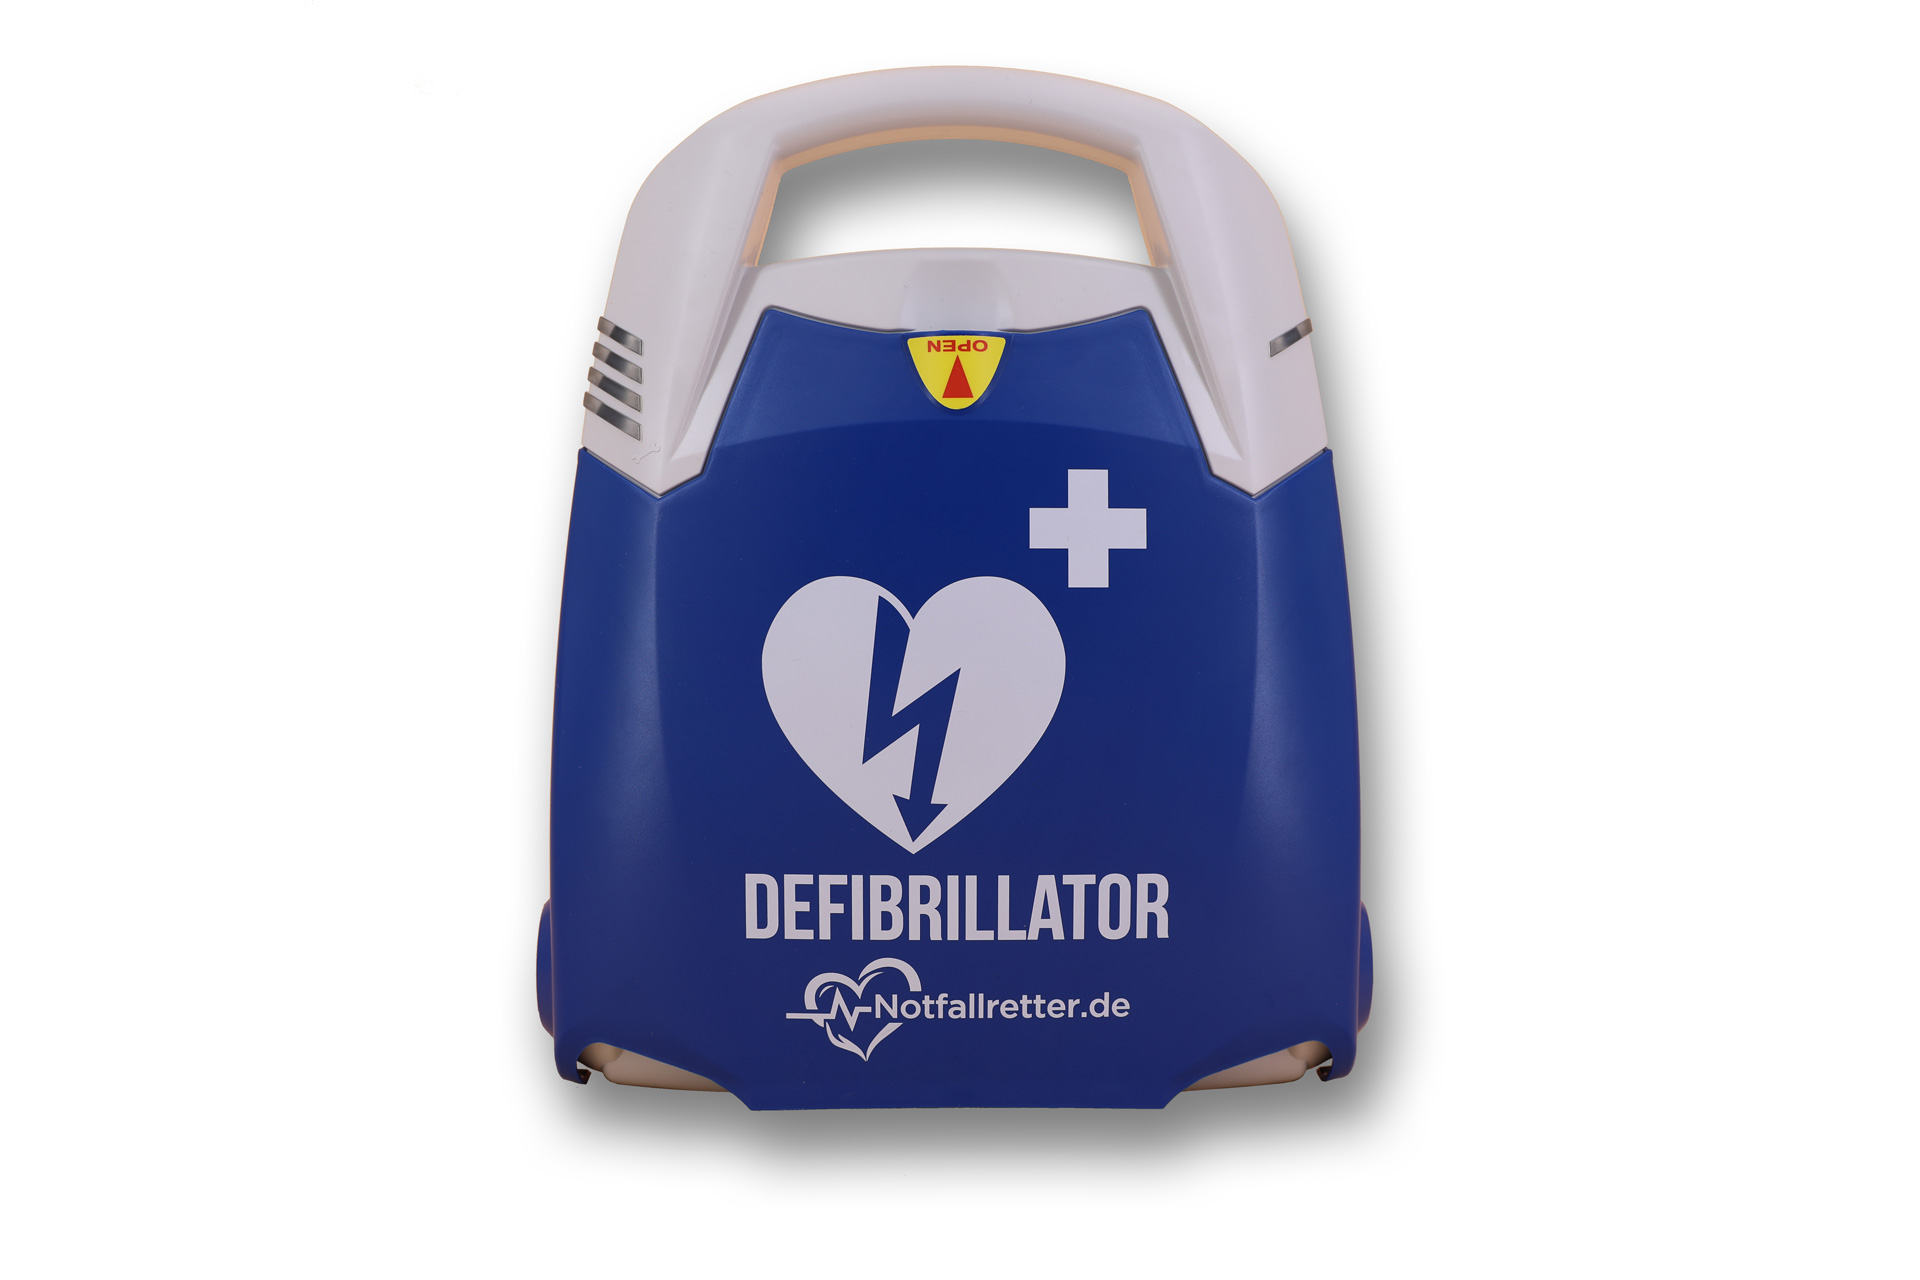 Notfallretter.de® Basic AED - Front